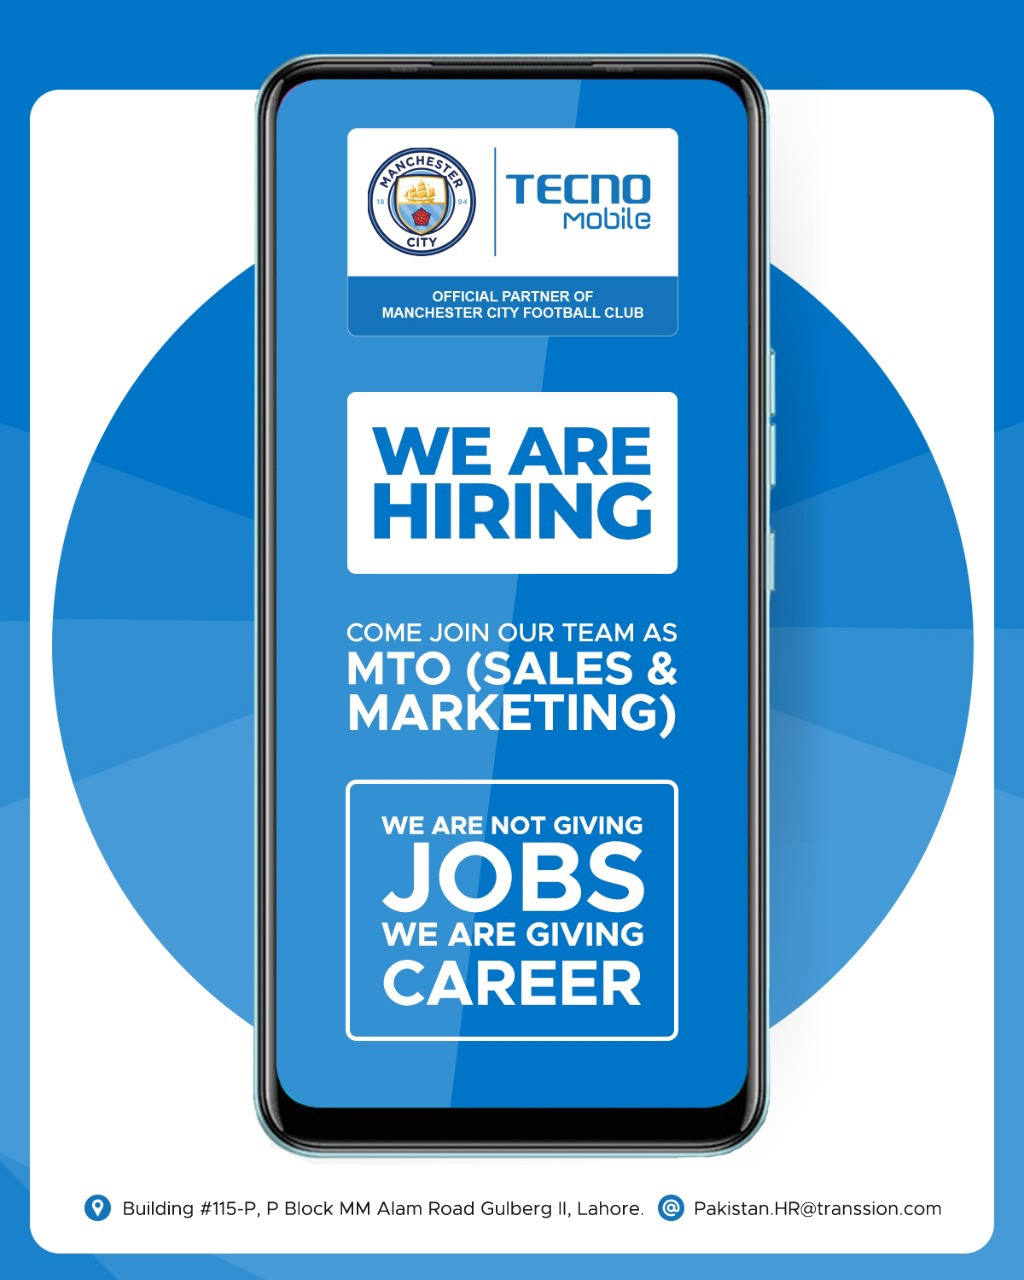 Management Trainee Officer Jobs in TECNO Mobile December 2020 Sales, Marketing & Retail MTO Program Batch 2 Latest